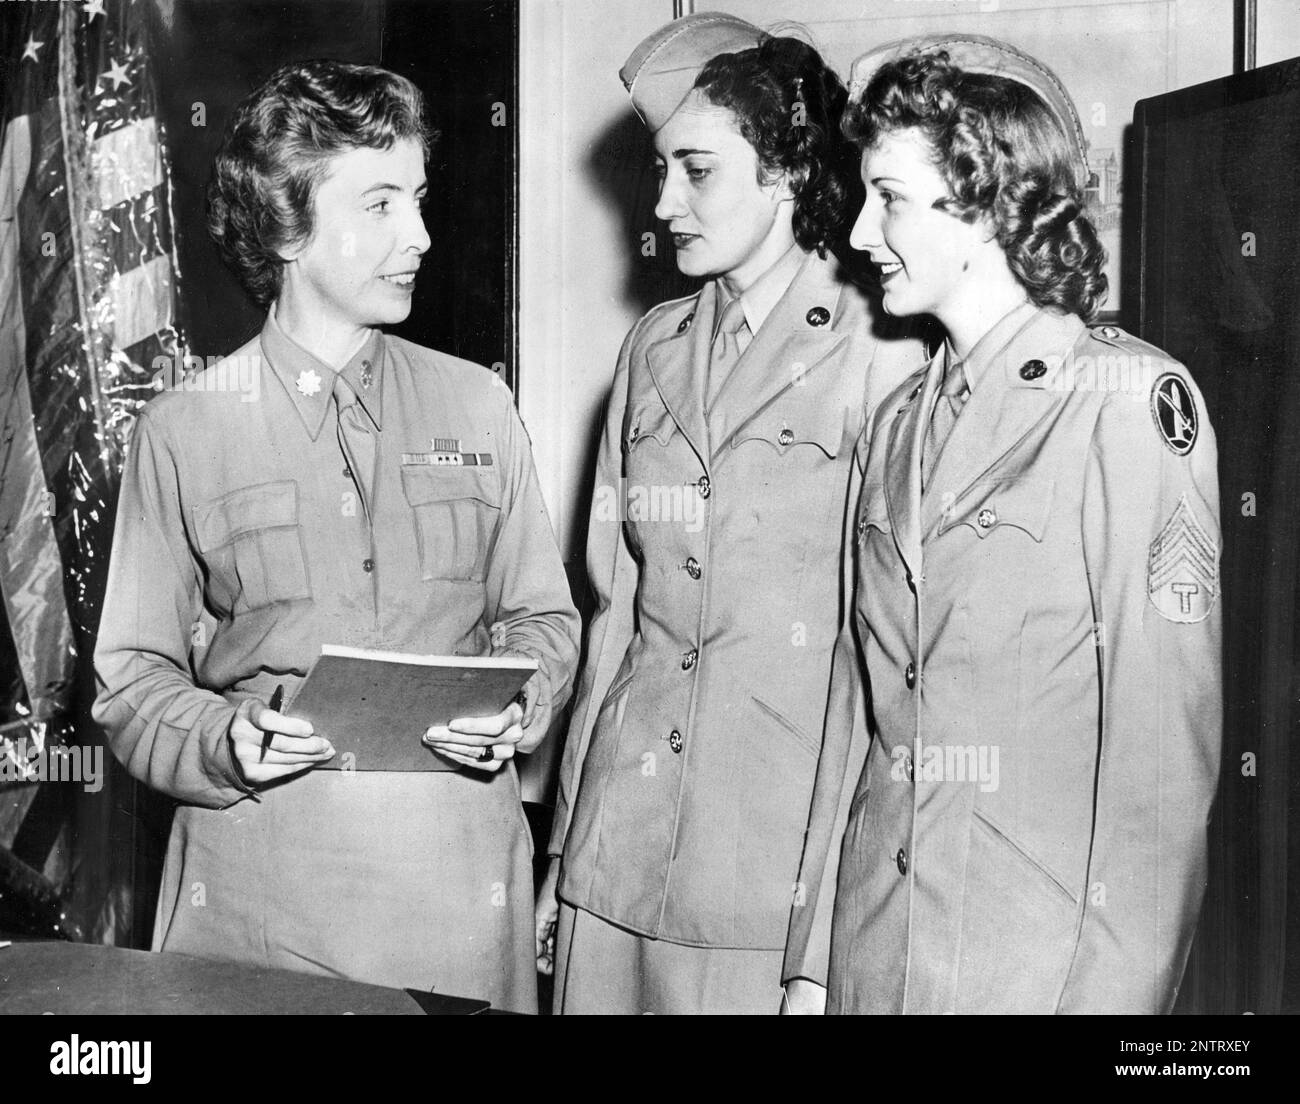 Veste tropicale WW2 Womens Army corps USA Banque D'Images